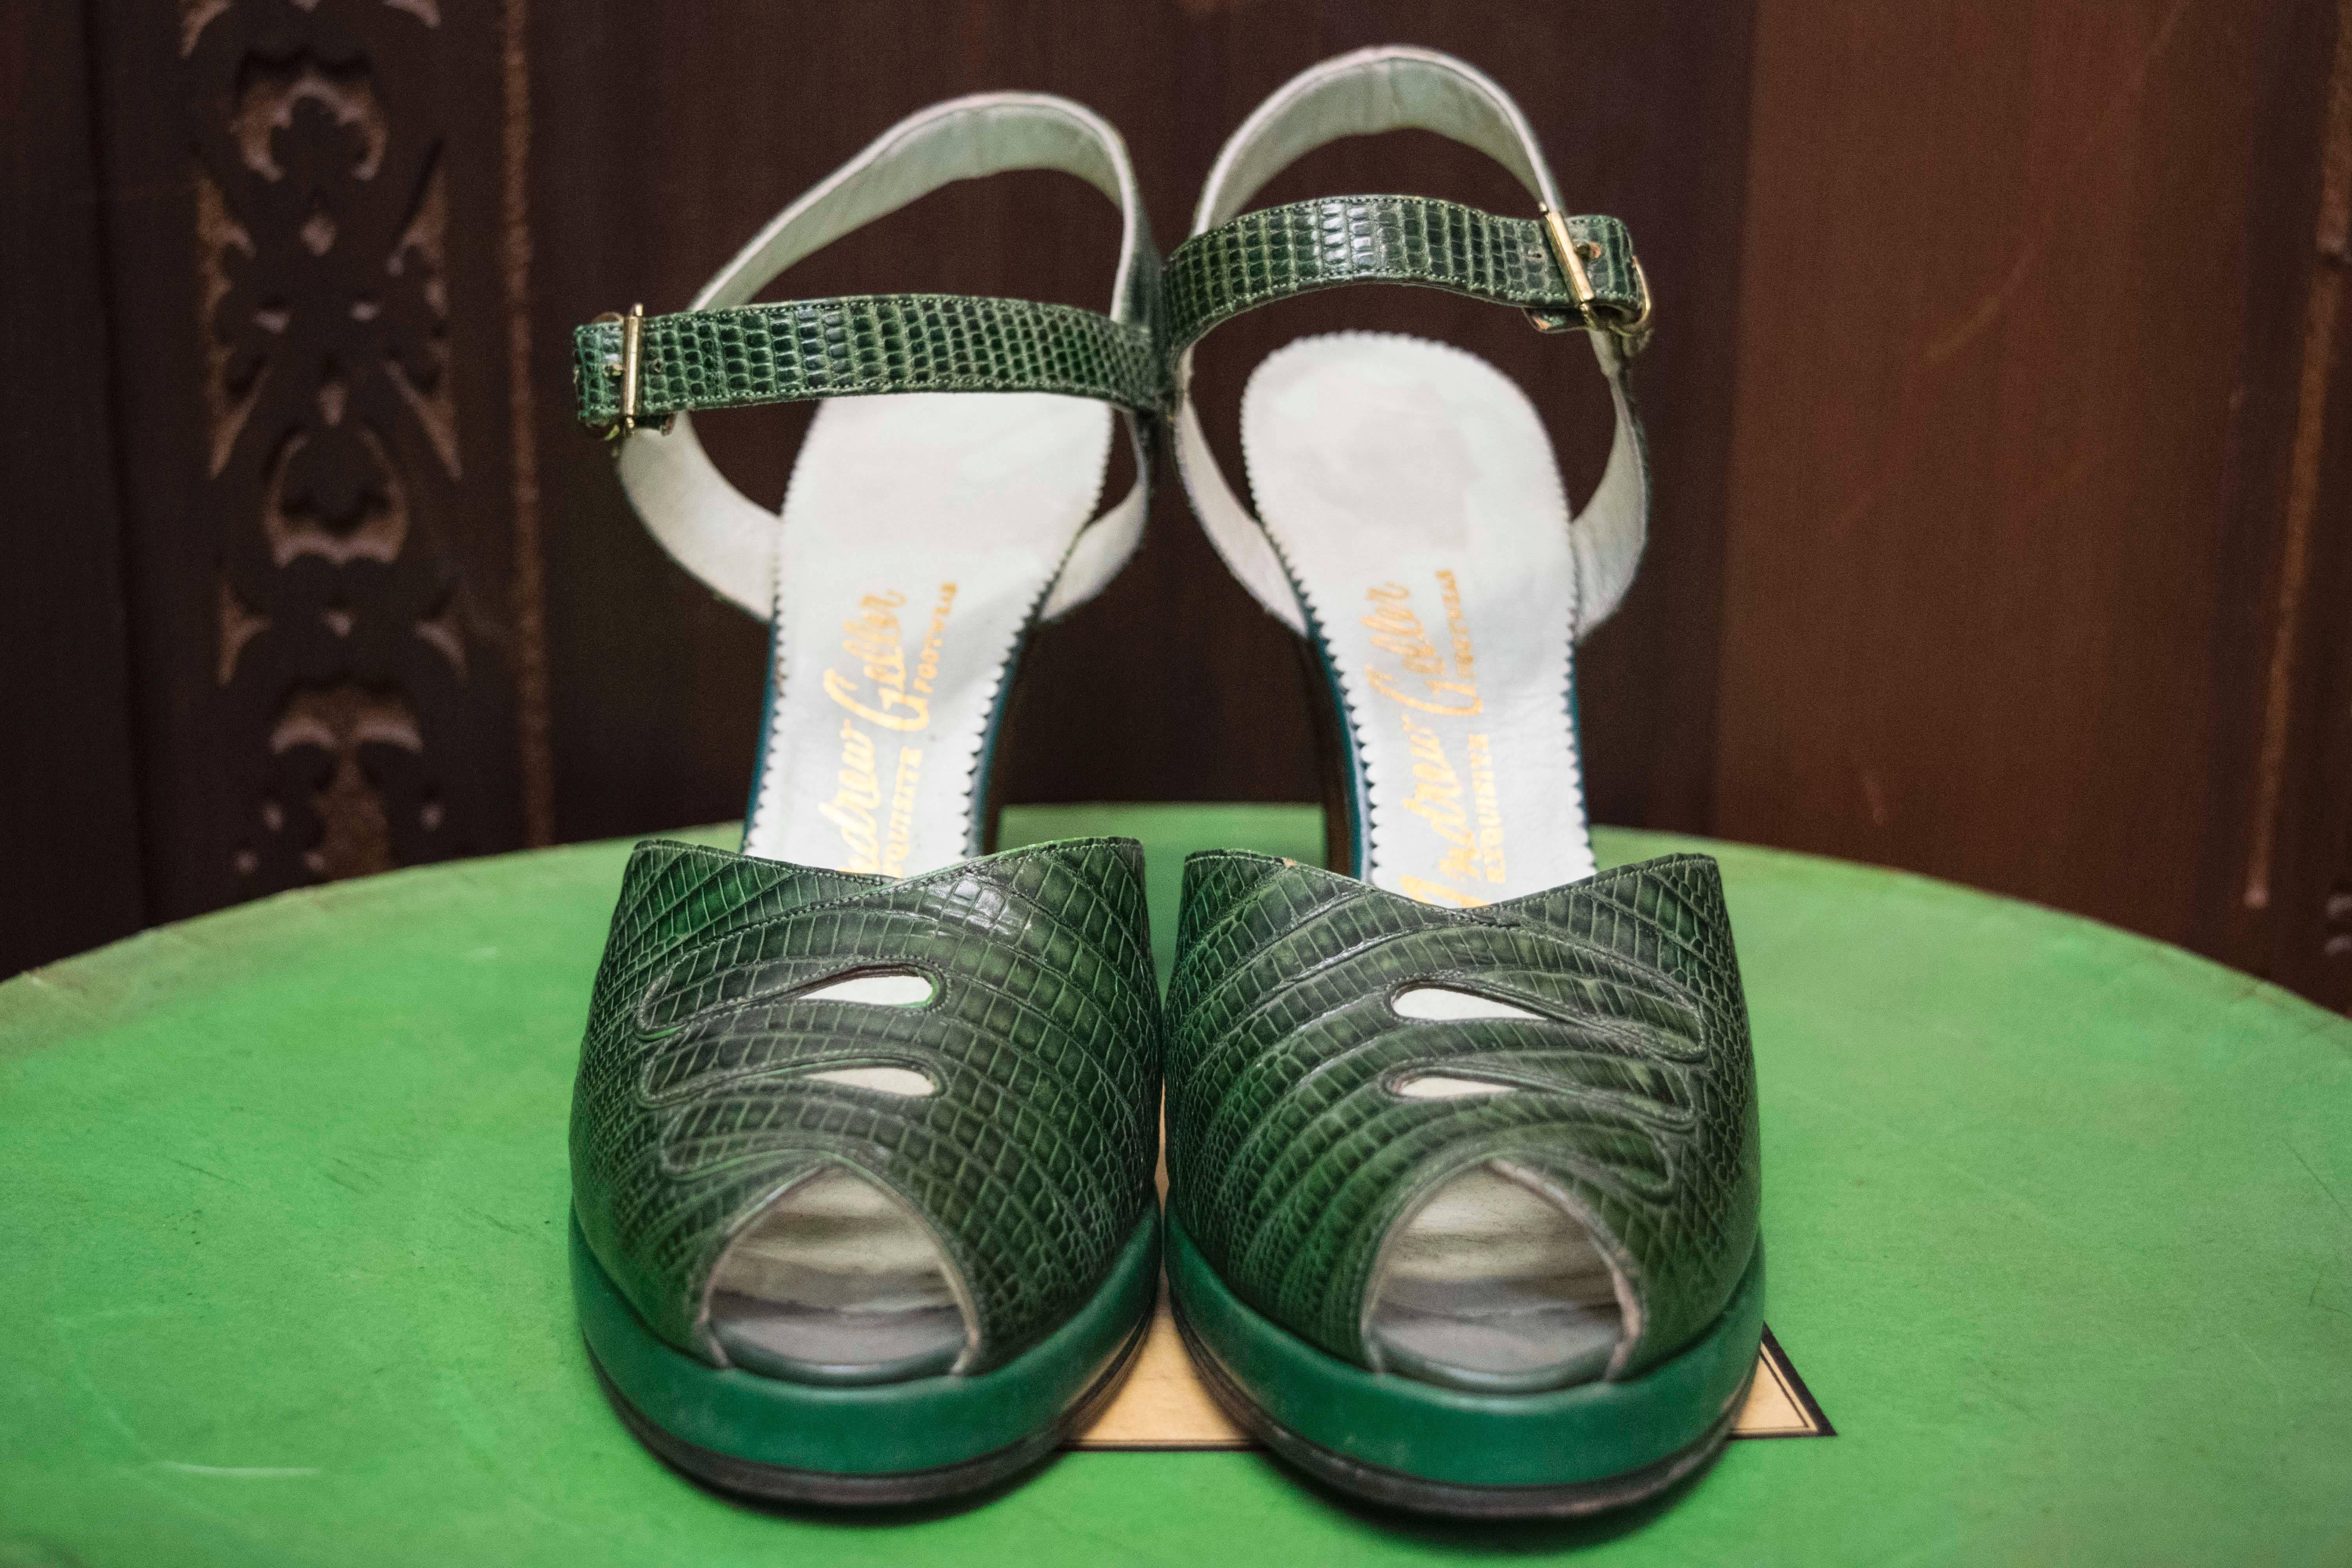 1940s Green Lizard Platform Shoes

Size 5.5 US